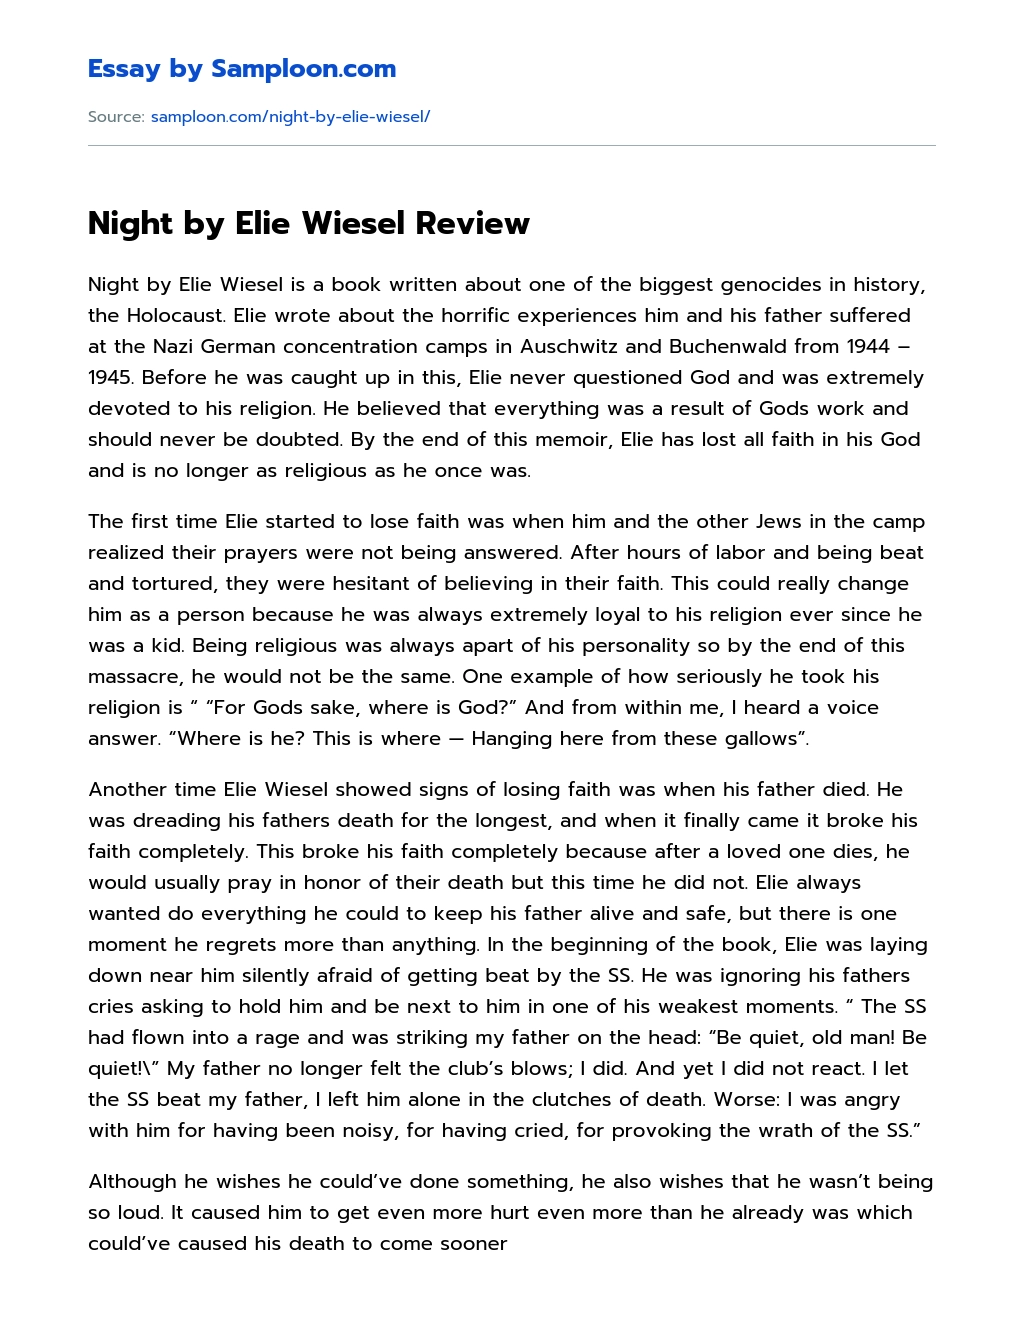 Night by Elie Wiesel Review essay